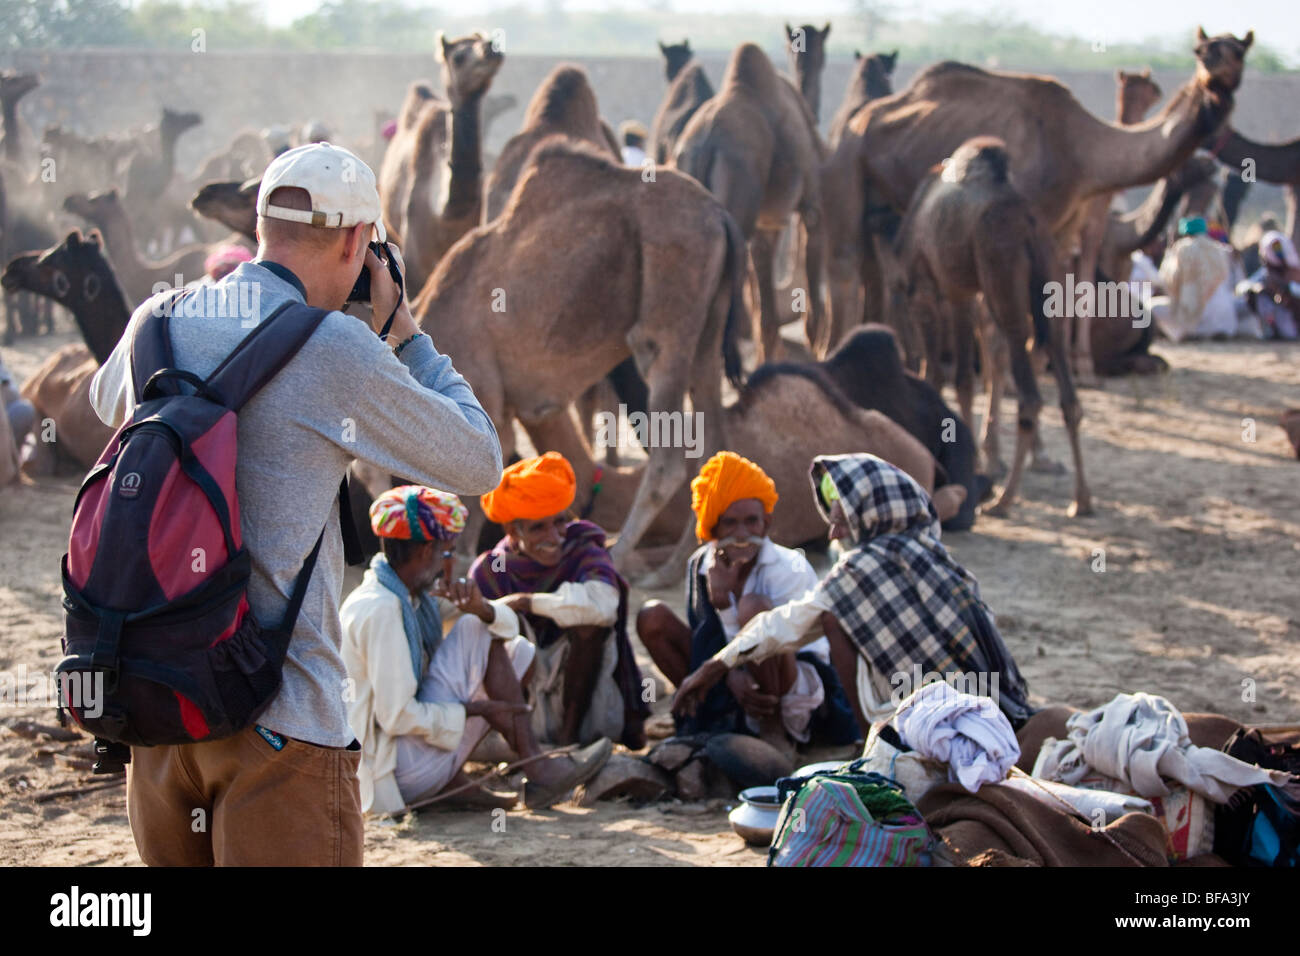 Tourist photographing Rajput men at the Camel Fair in Pushkar India Stock Photo